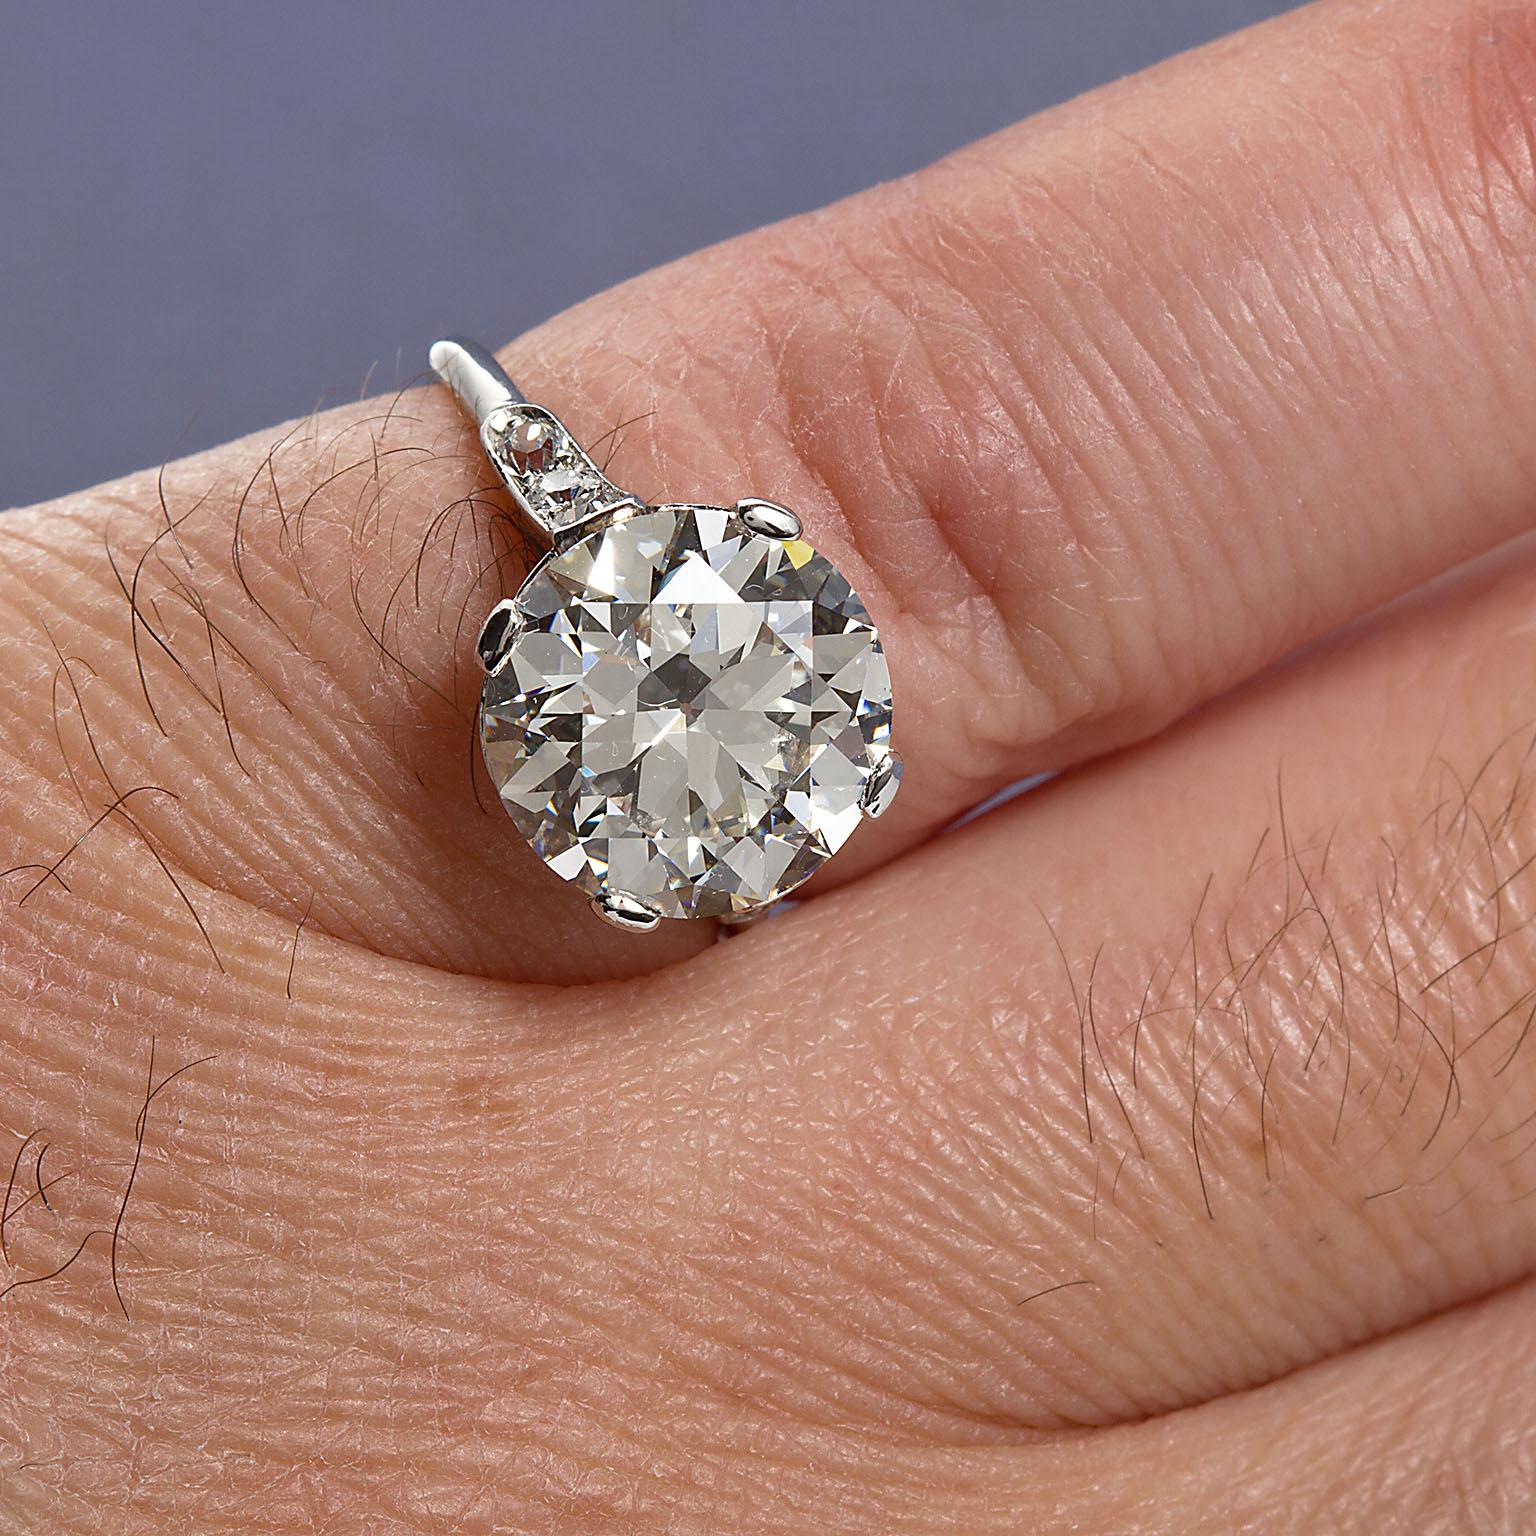 4 carat cartier diamond ring